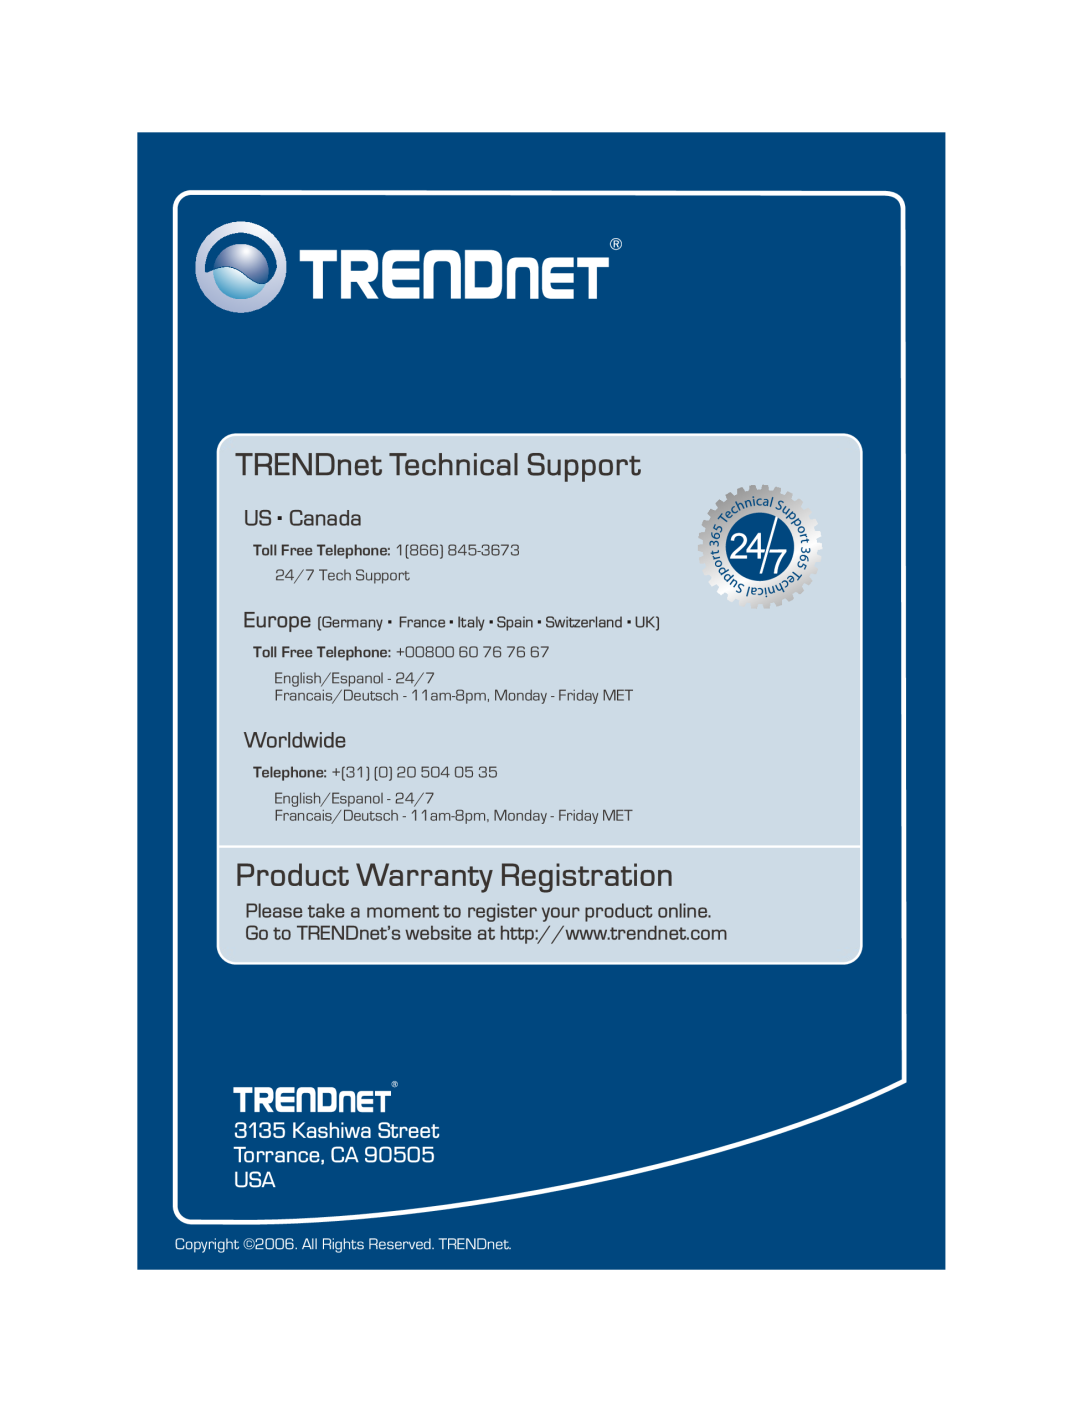 TRENDnet TK-407K TRENDnet Technical Support, Product Warranty Registration, US . Canada, Worldwide, Toll Free Telephone 